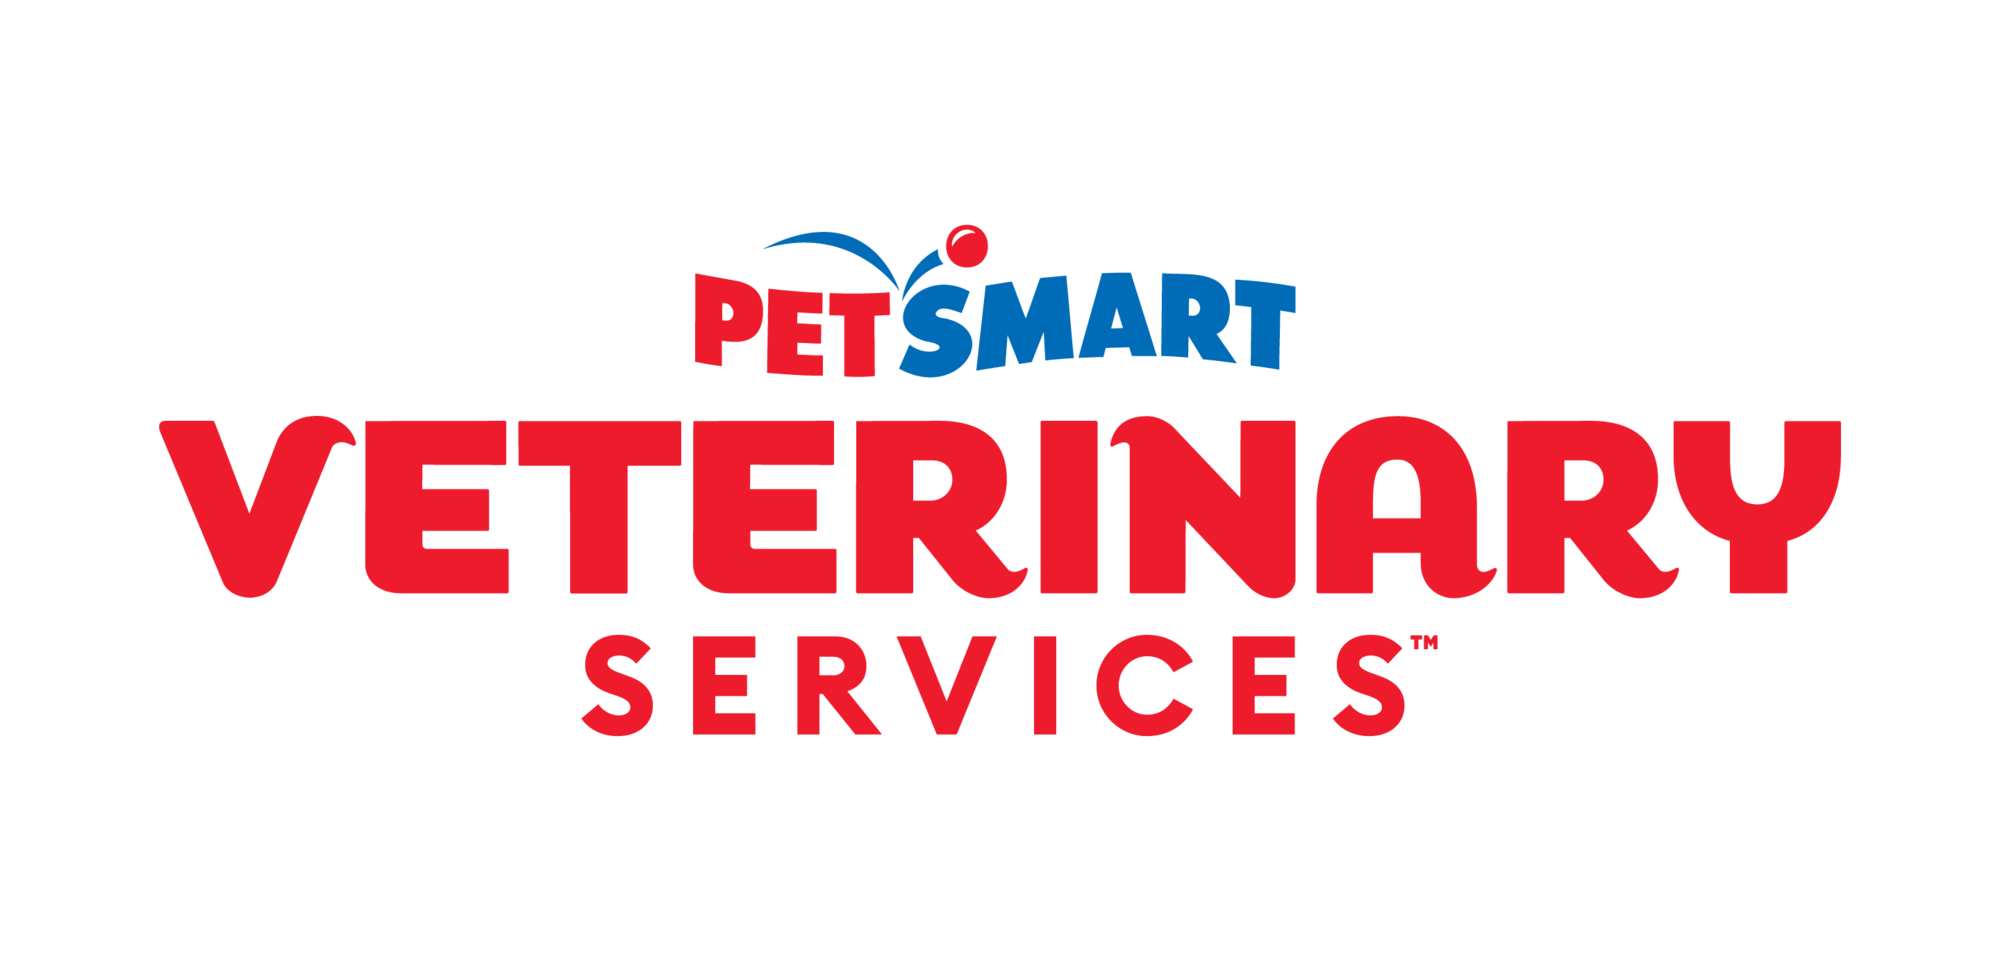 Petsmart Veterinary Services logo